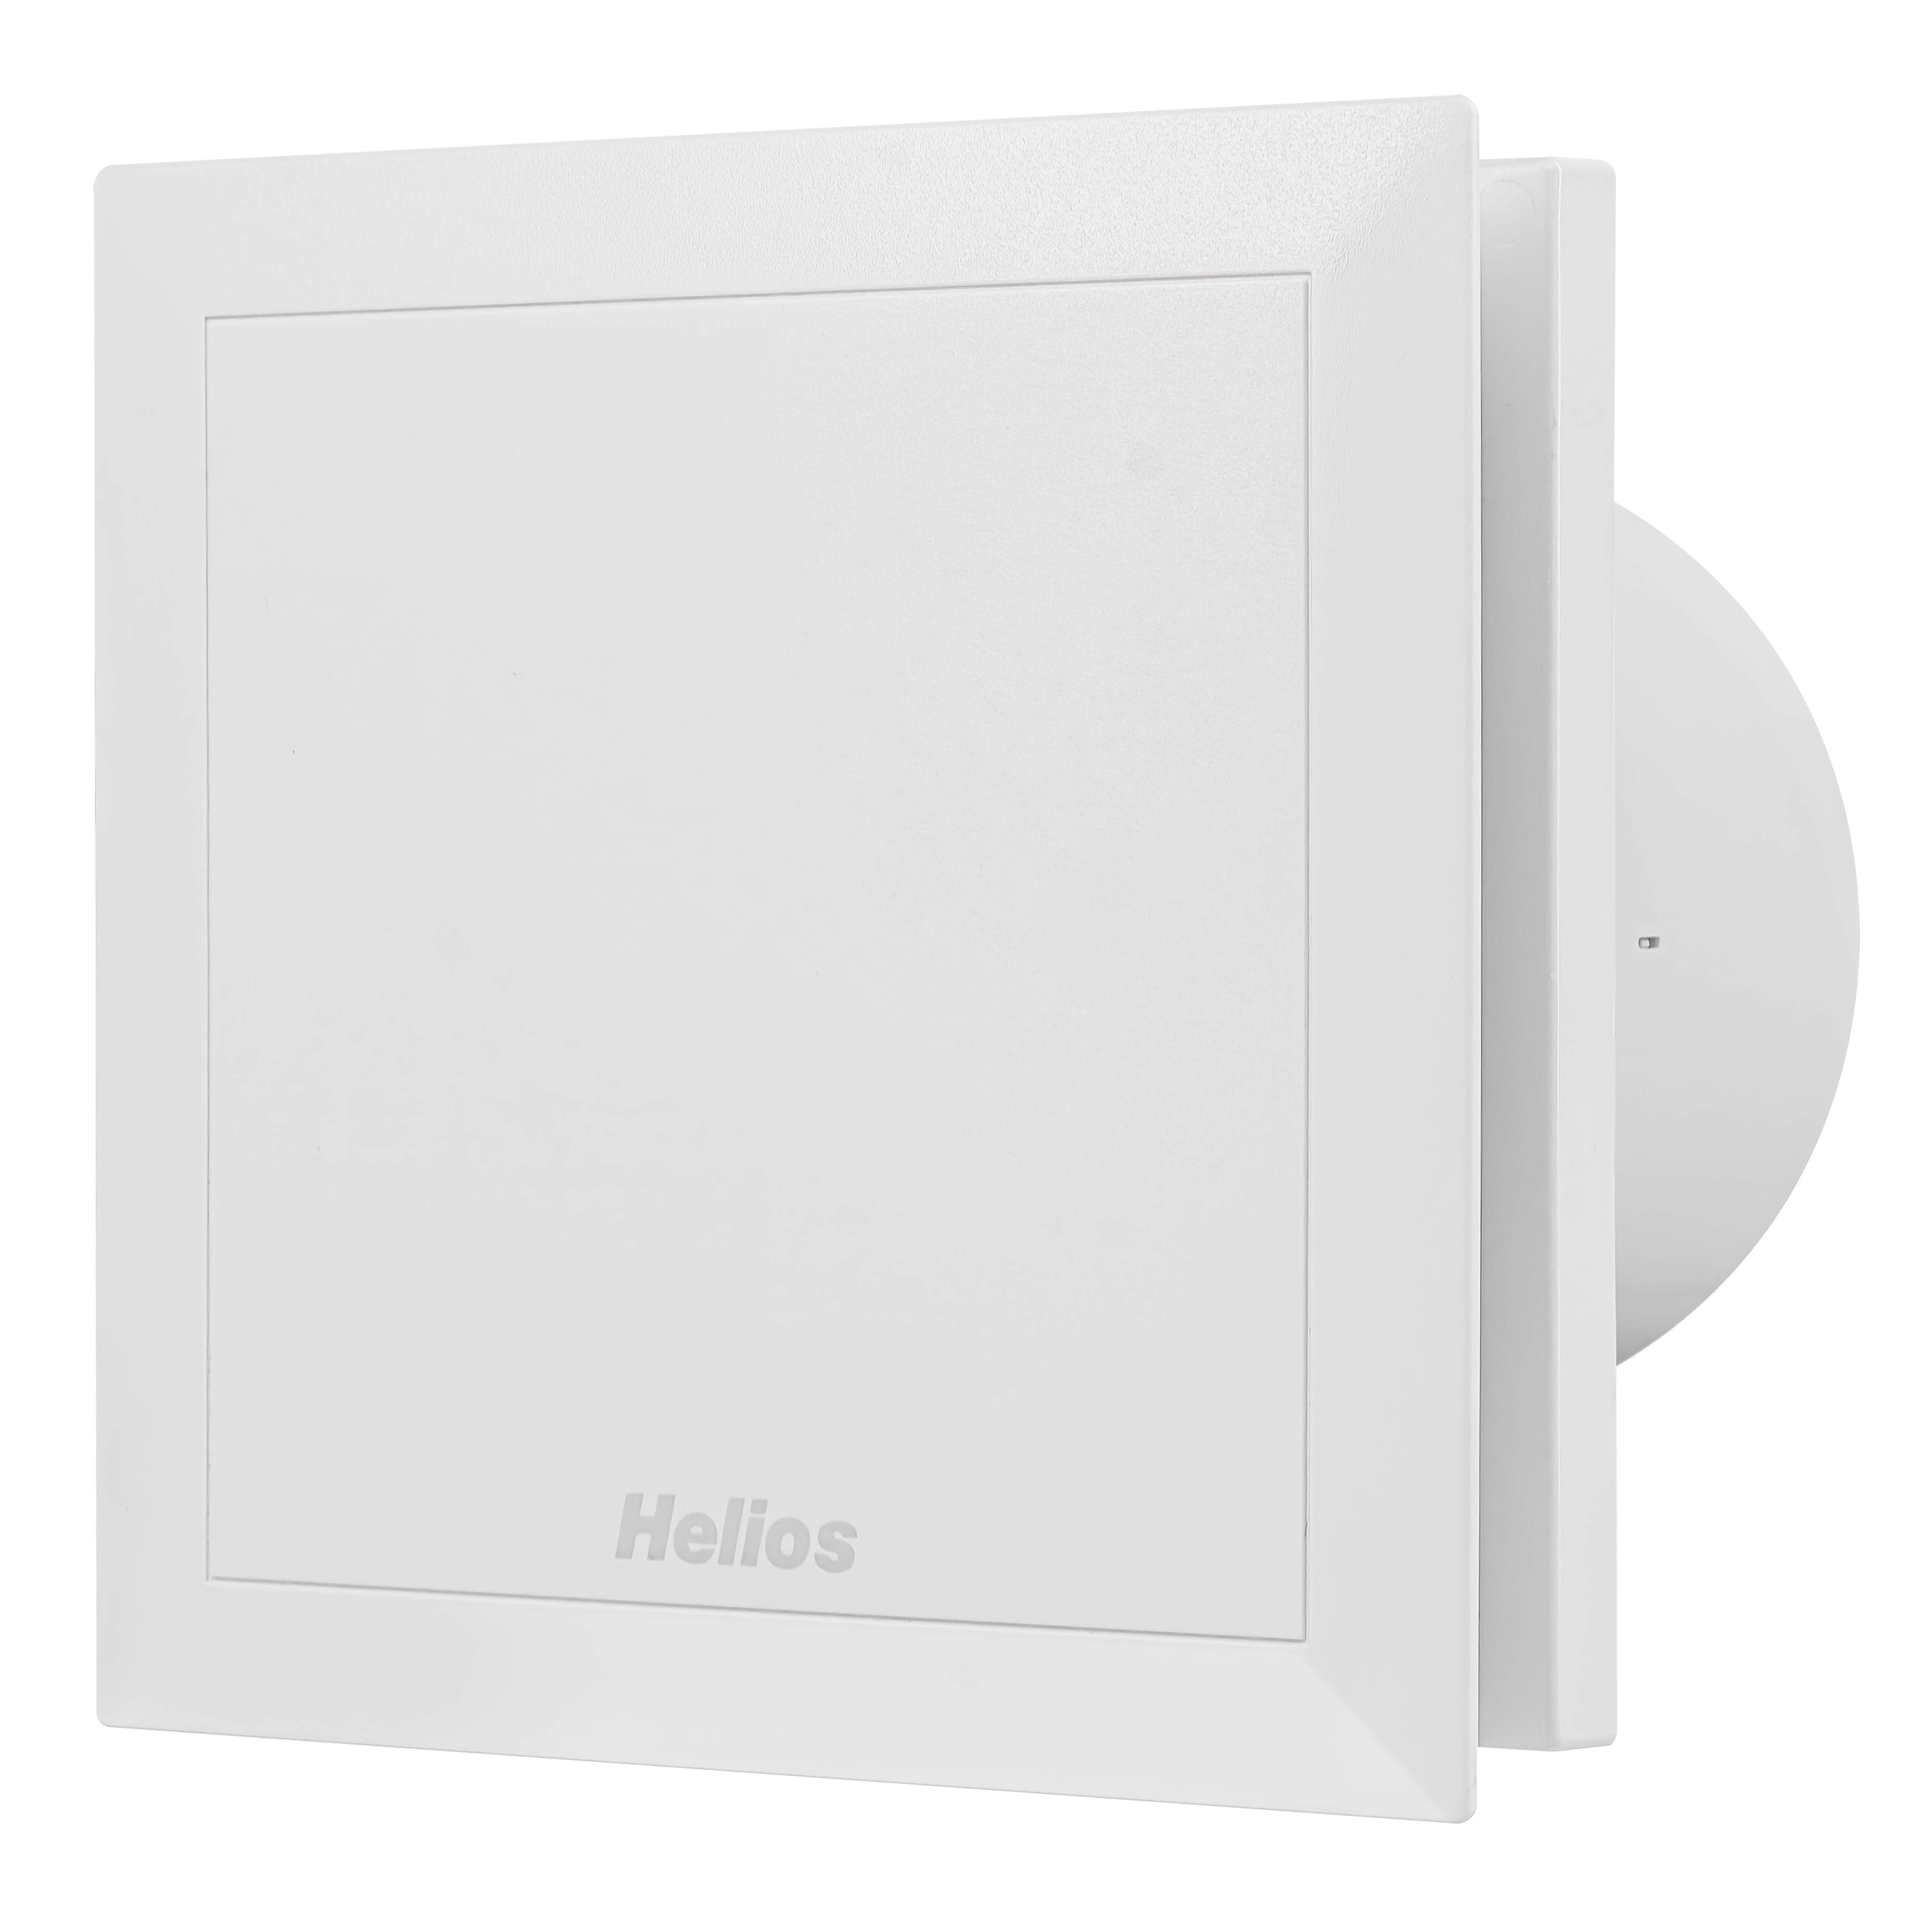 Характеристики вентилятор helios с таймером выключения Helios MiniVent M1/120 N/C